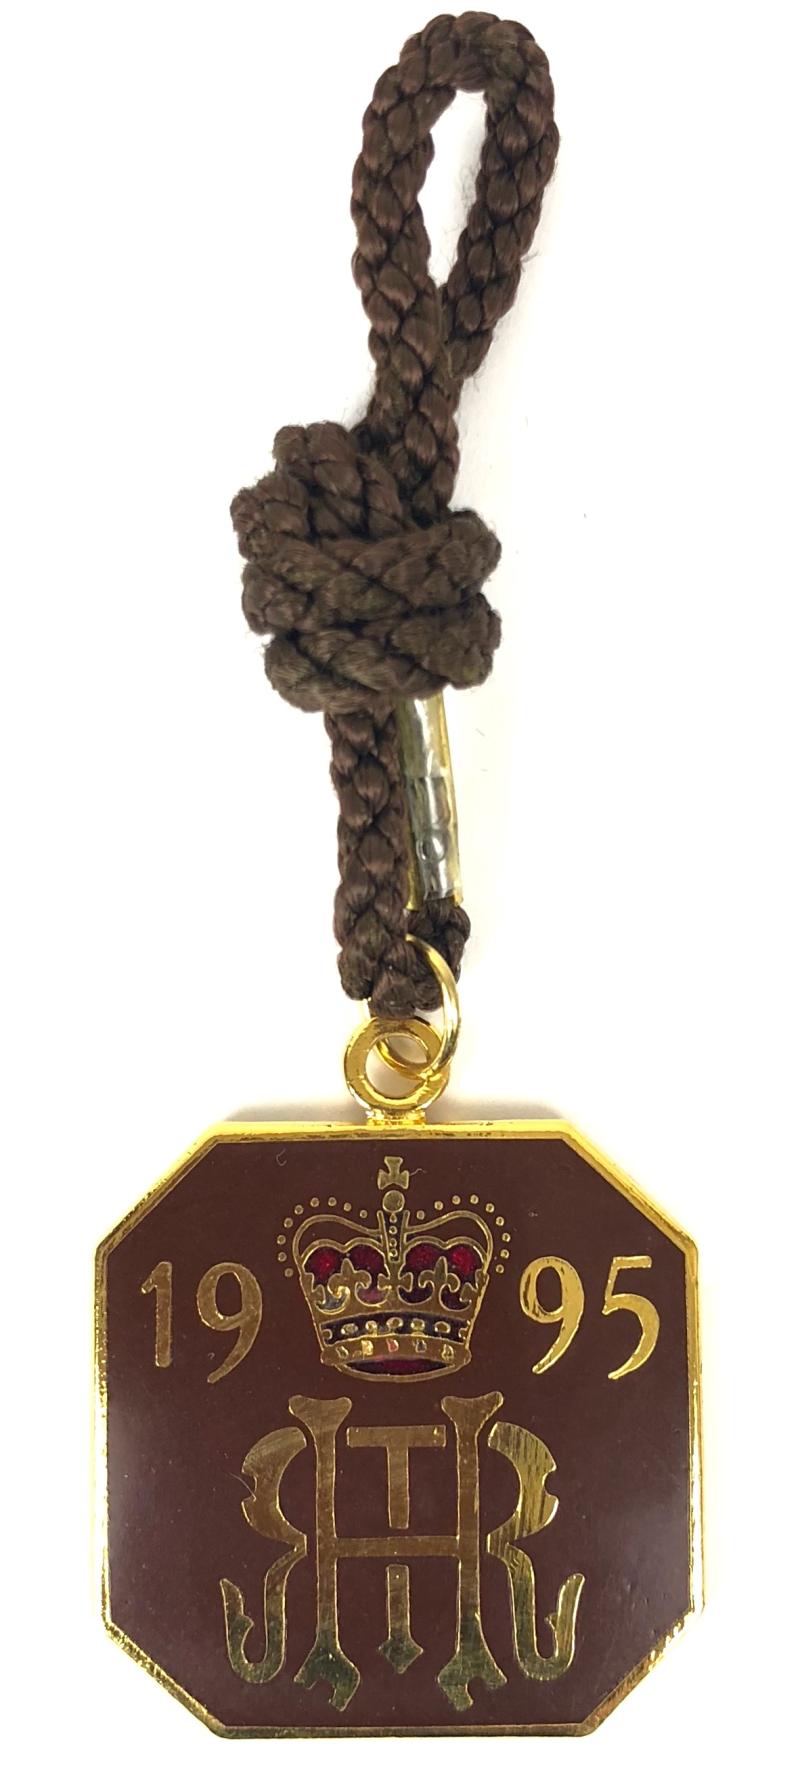 1995 Henley Royal Regatta stewards enclosure badge